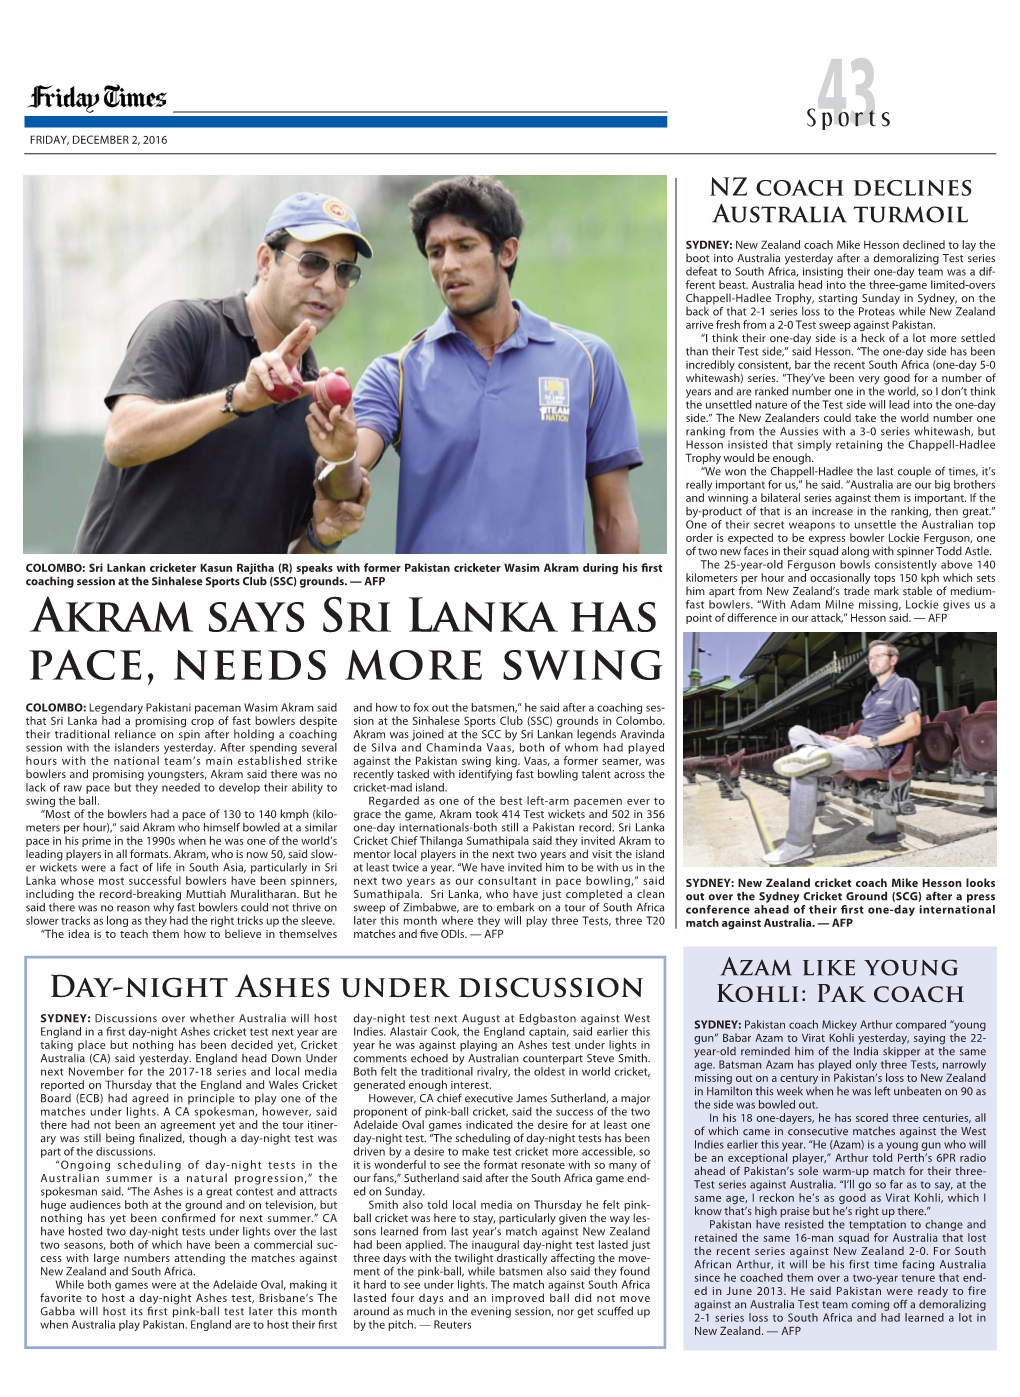 Akram Says Sri Lanka Has Pace, Needs More Swing